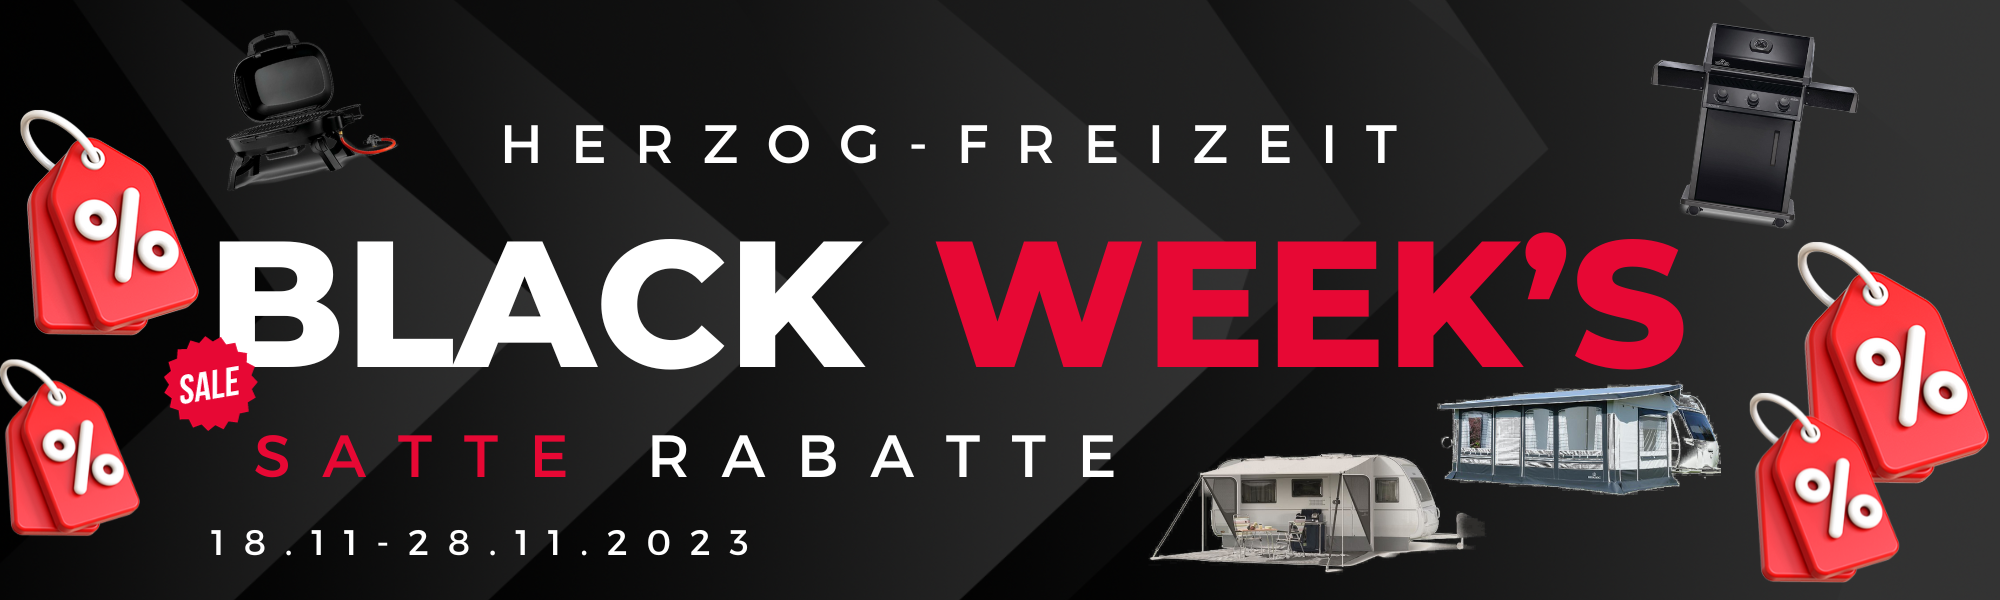 https://herzog-freizeit.de/media/image/storage/opc/Marketing/Aktionen/Blackweek/banner%20blackweek%20herzog%202000x600.png